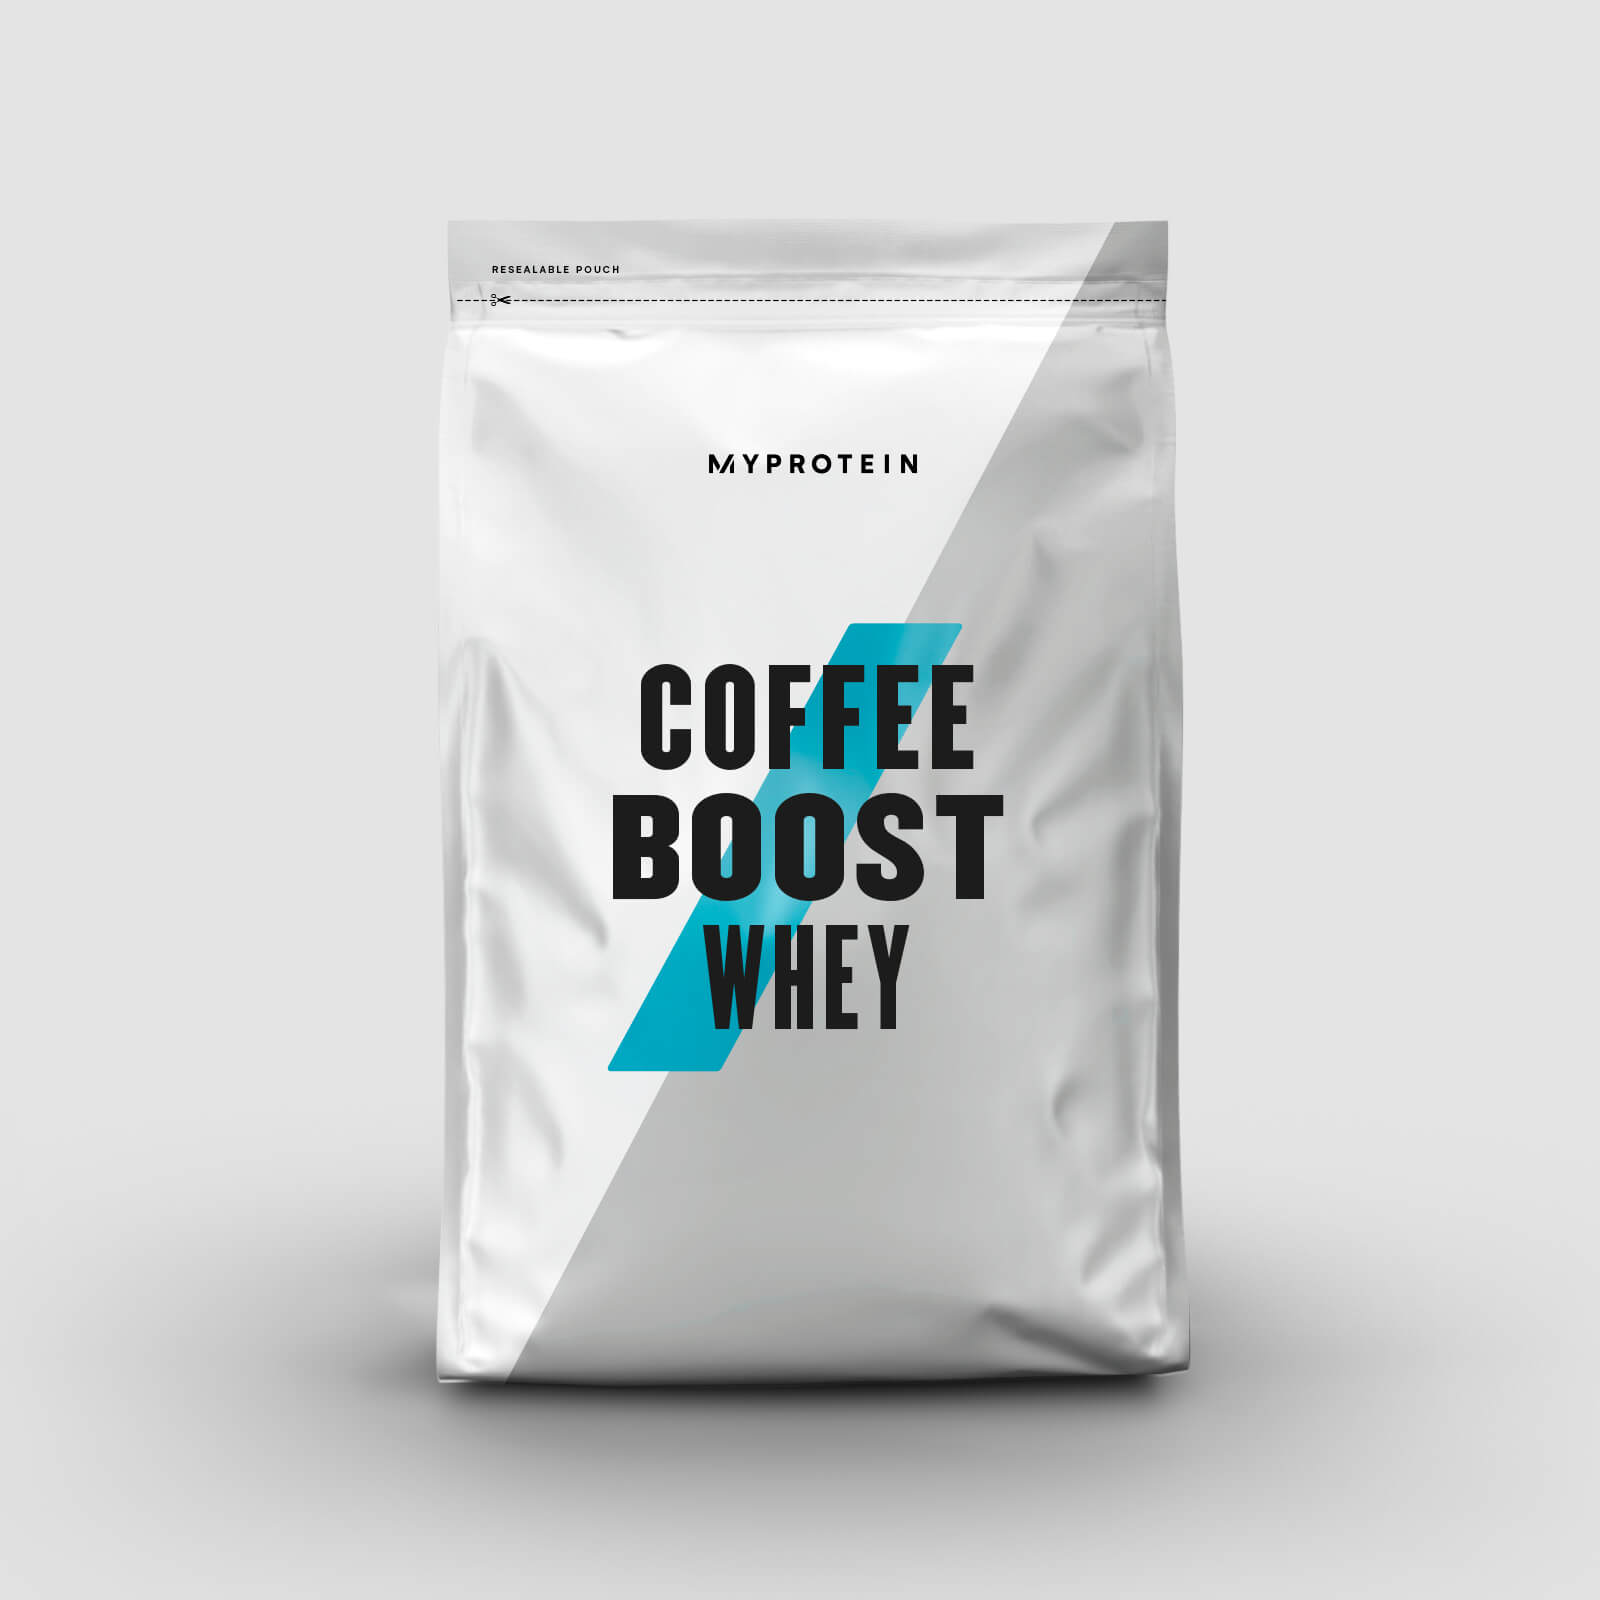 Myprotein Coffee Boost Whey - 1kg - Caramel Macchiato